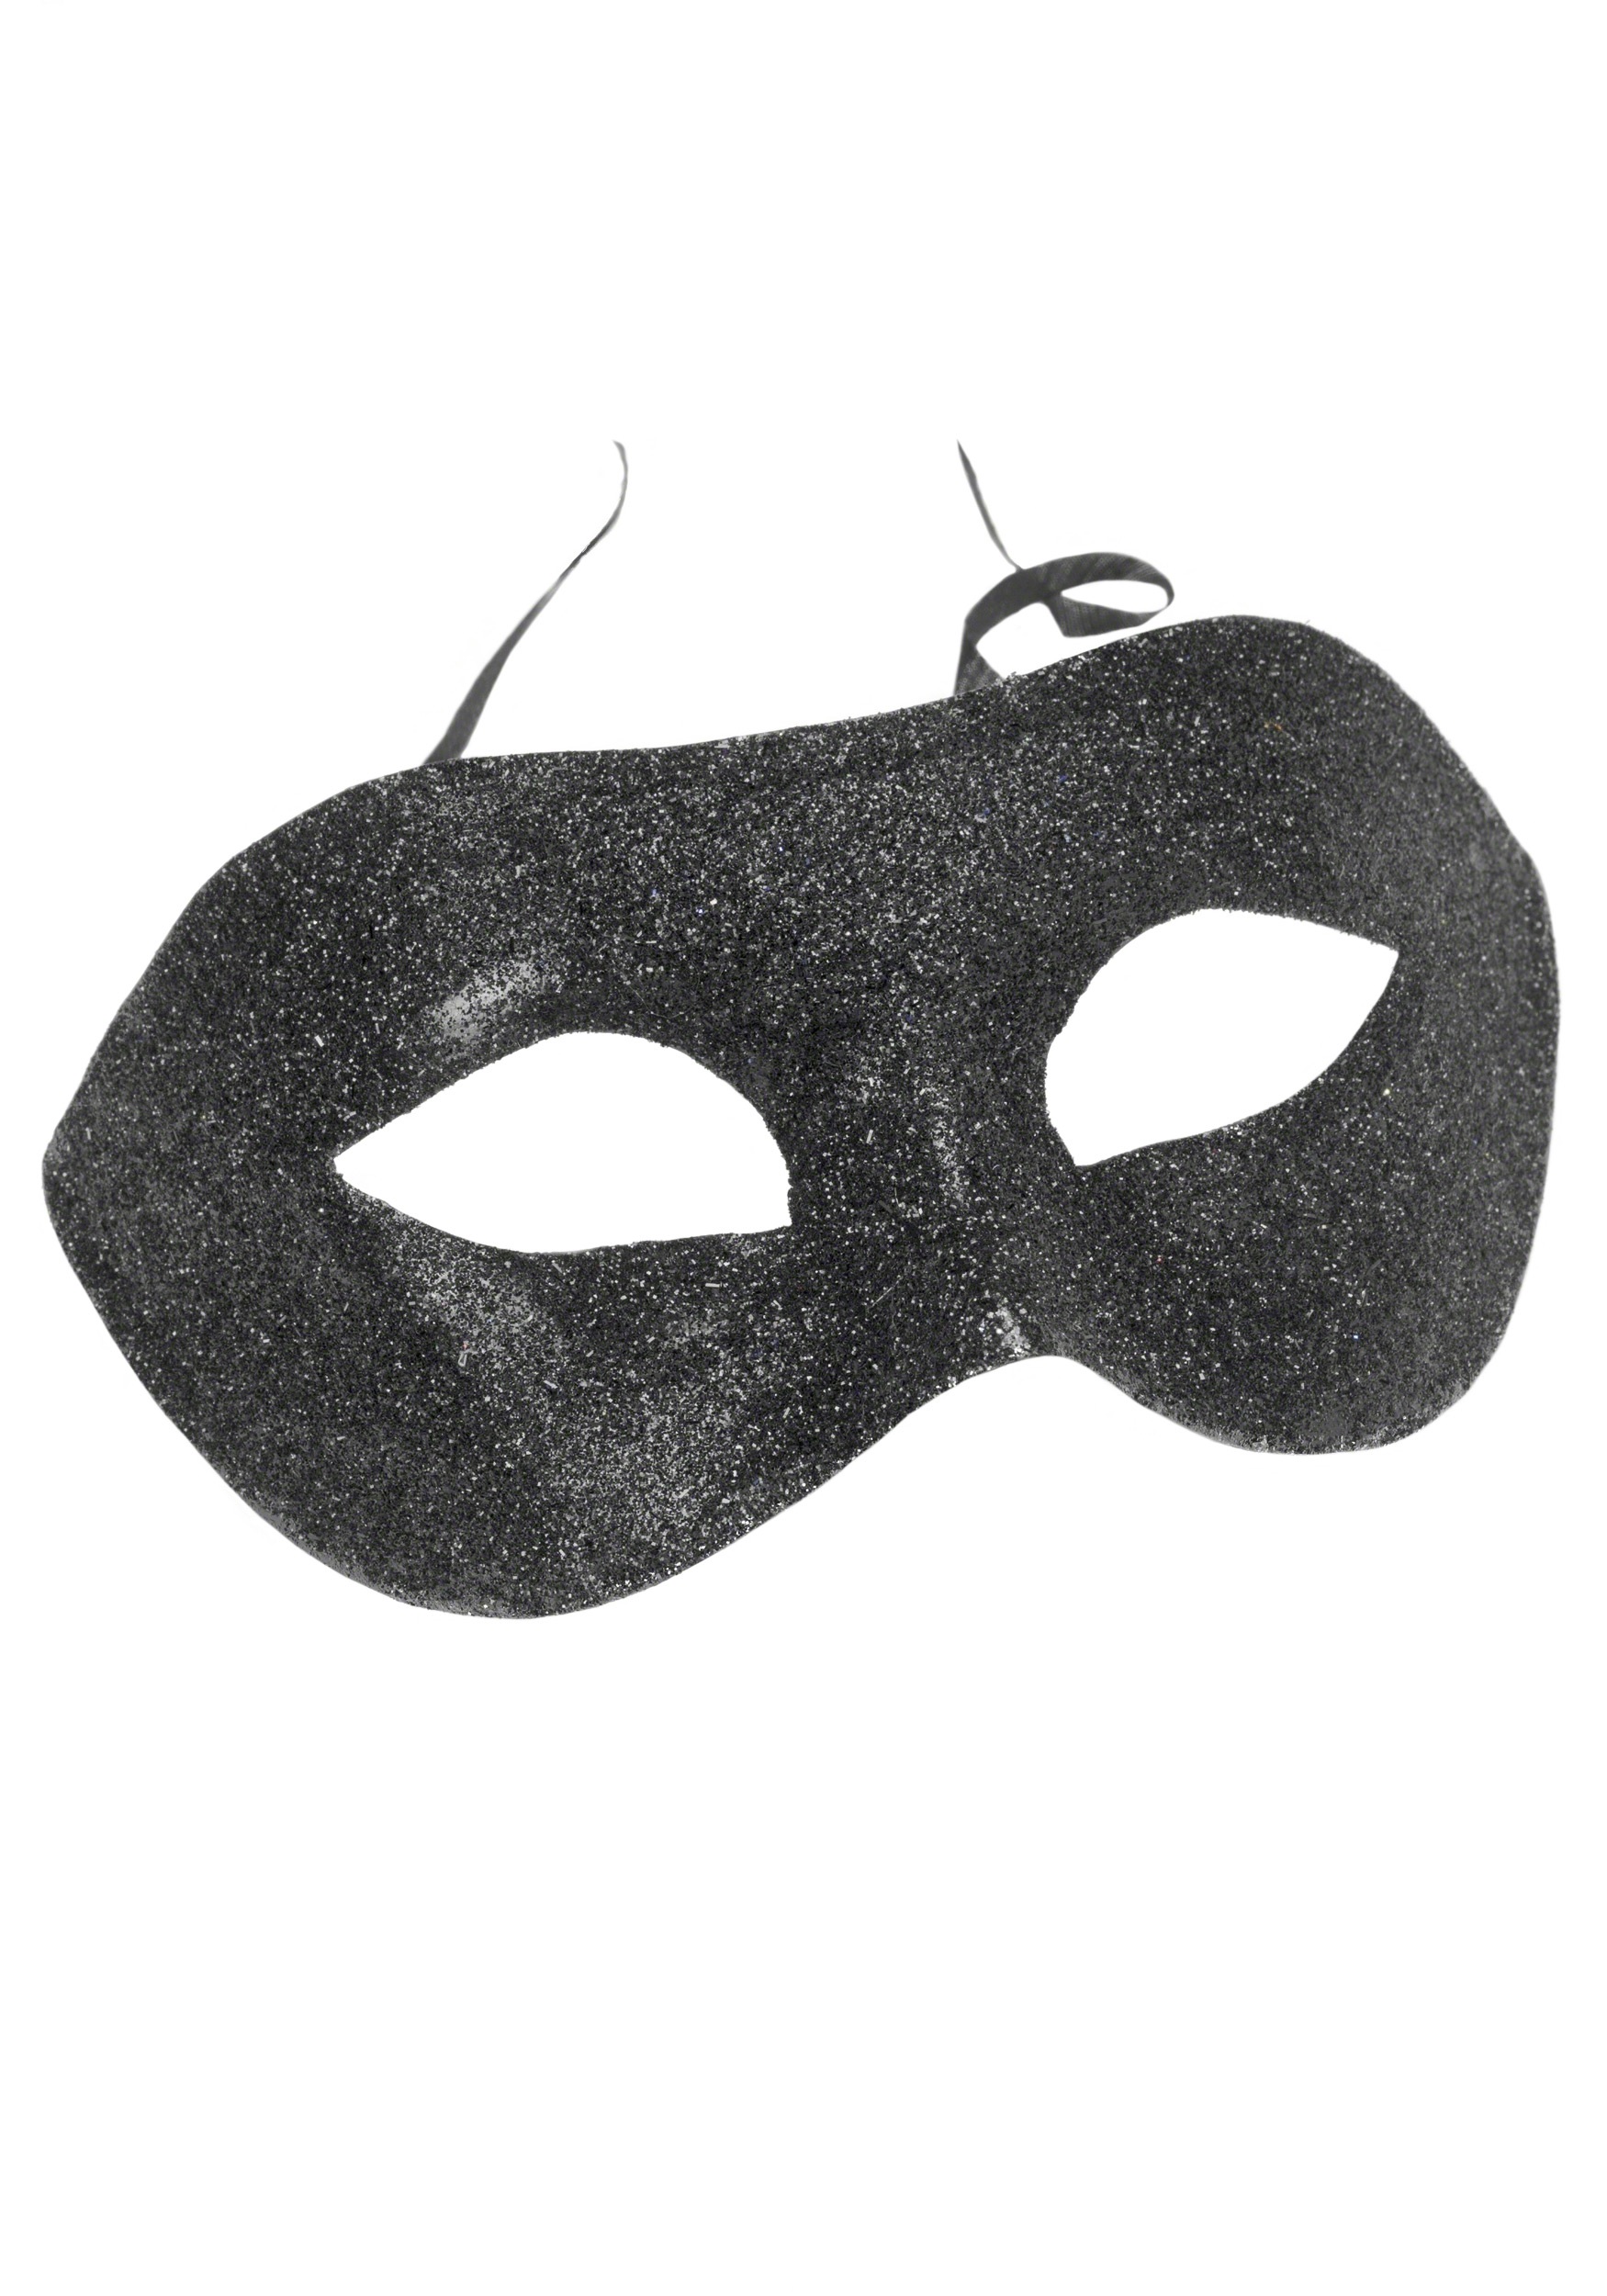 Black Glitter Eyemask Costume Accessory